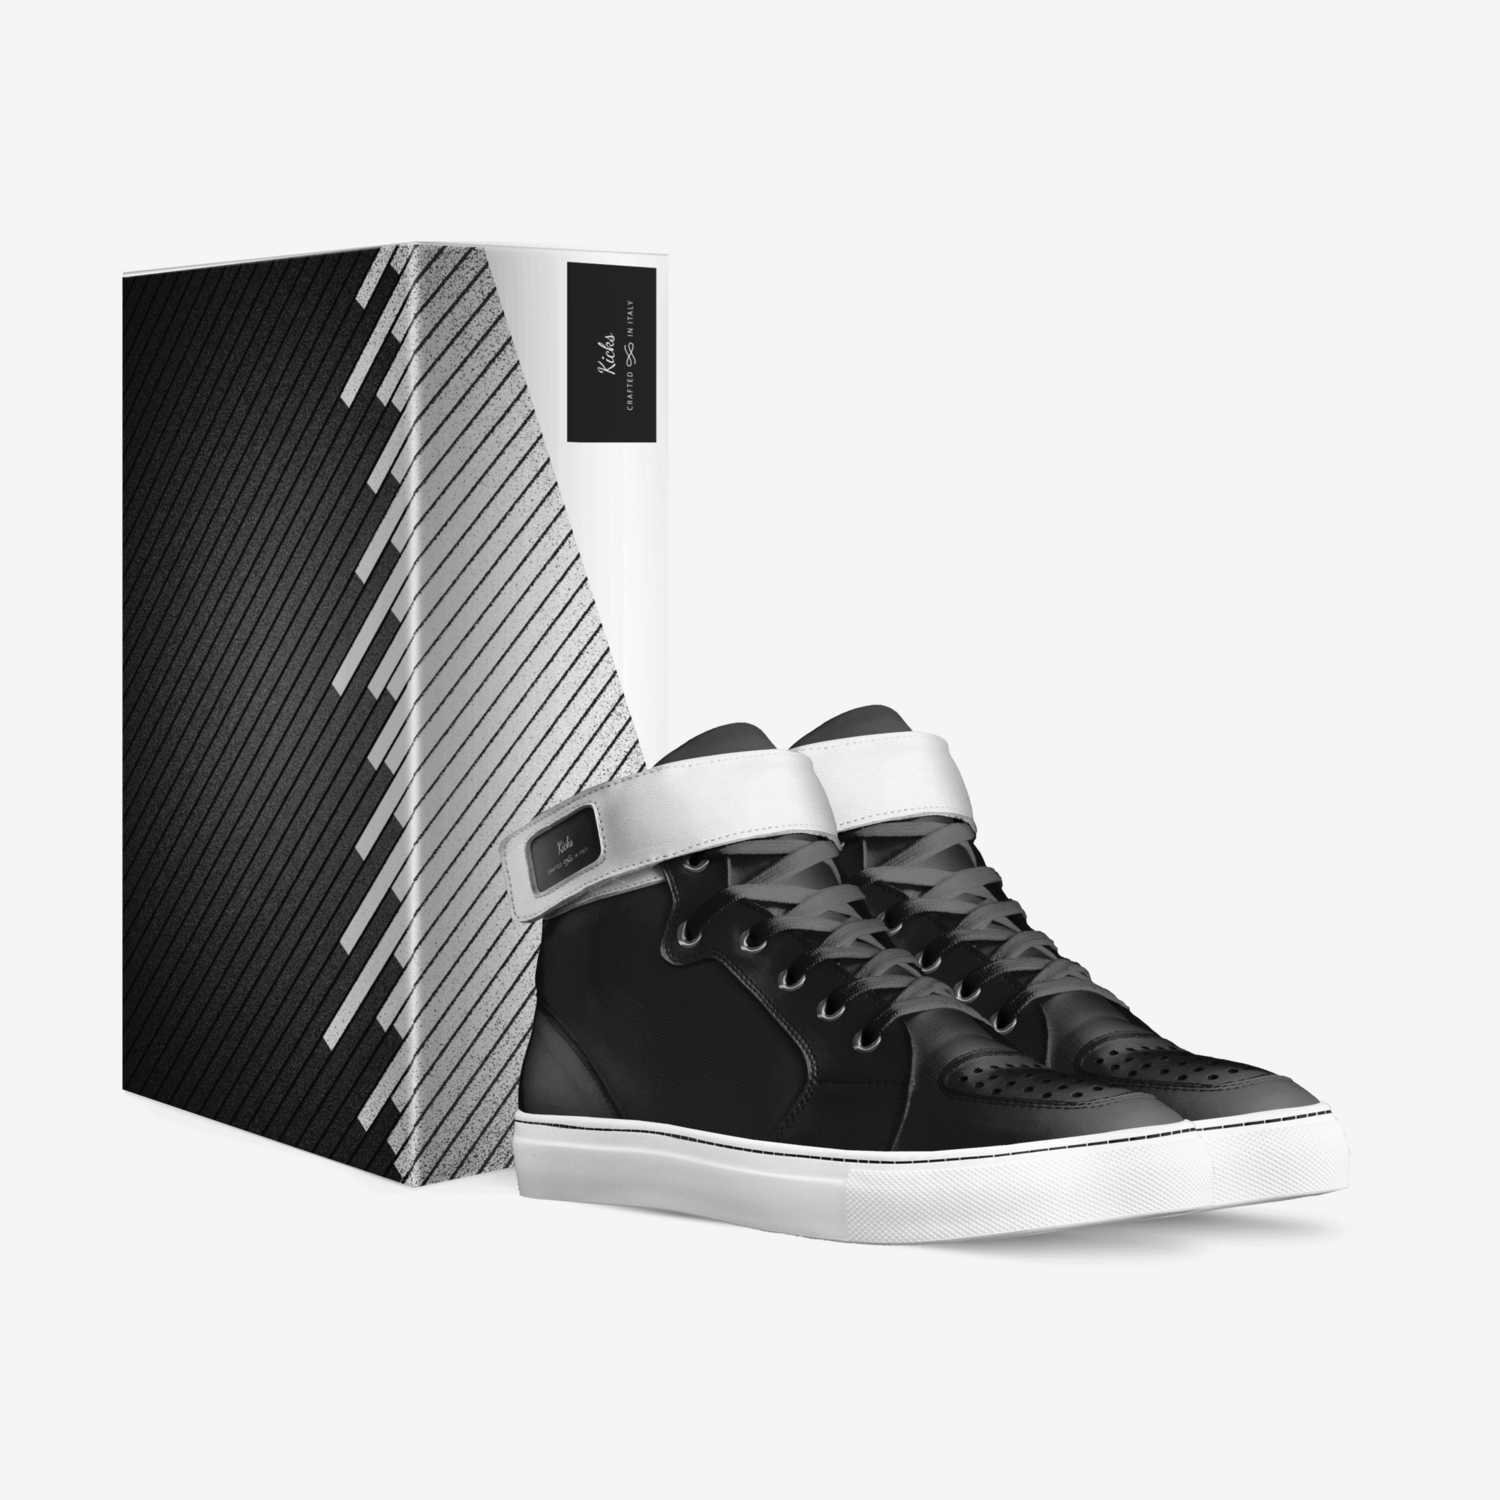 Kicks custom made in Italy shoes by Maro Akeni | Box view